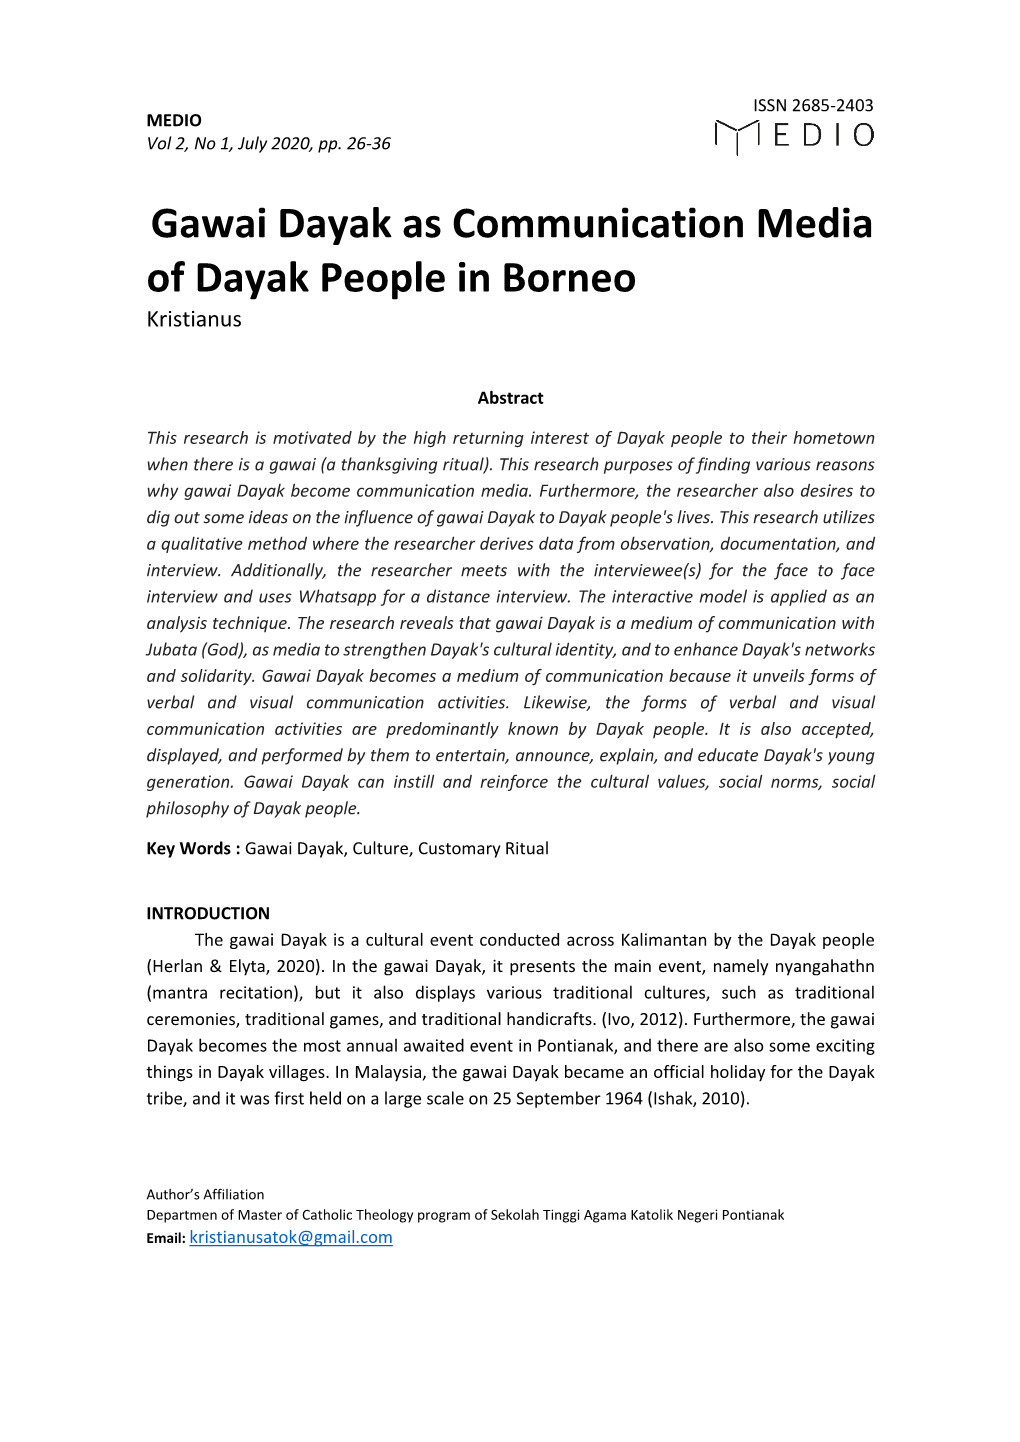 Gawai Dayak As Communication Media of Dayak People in Borneo Kristianus